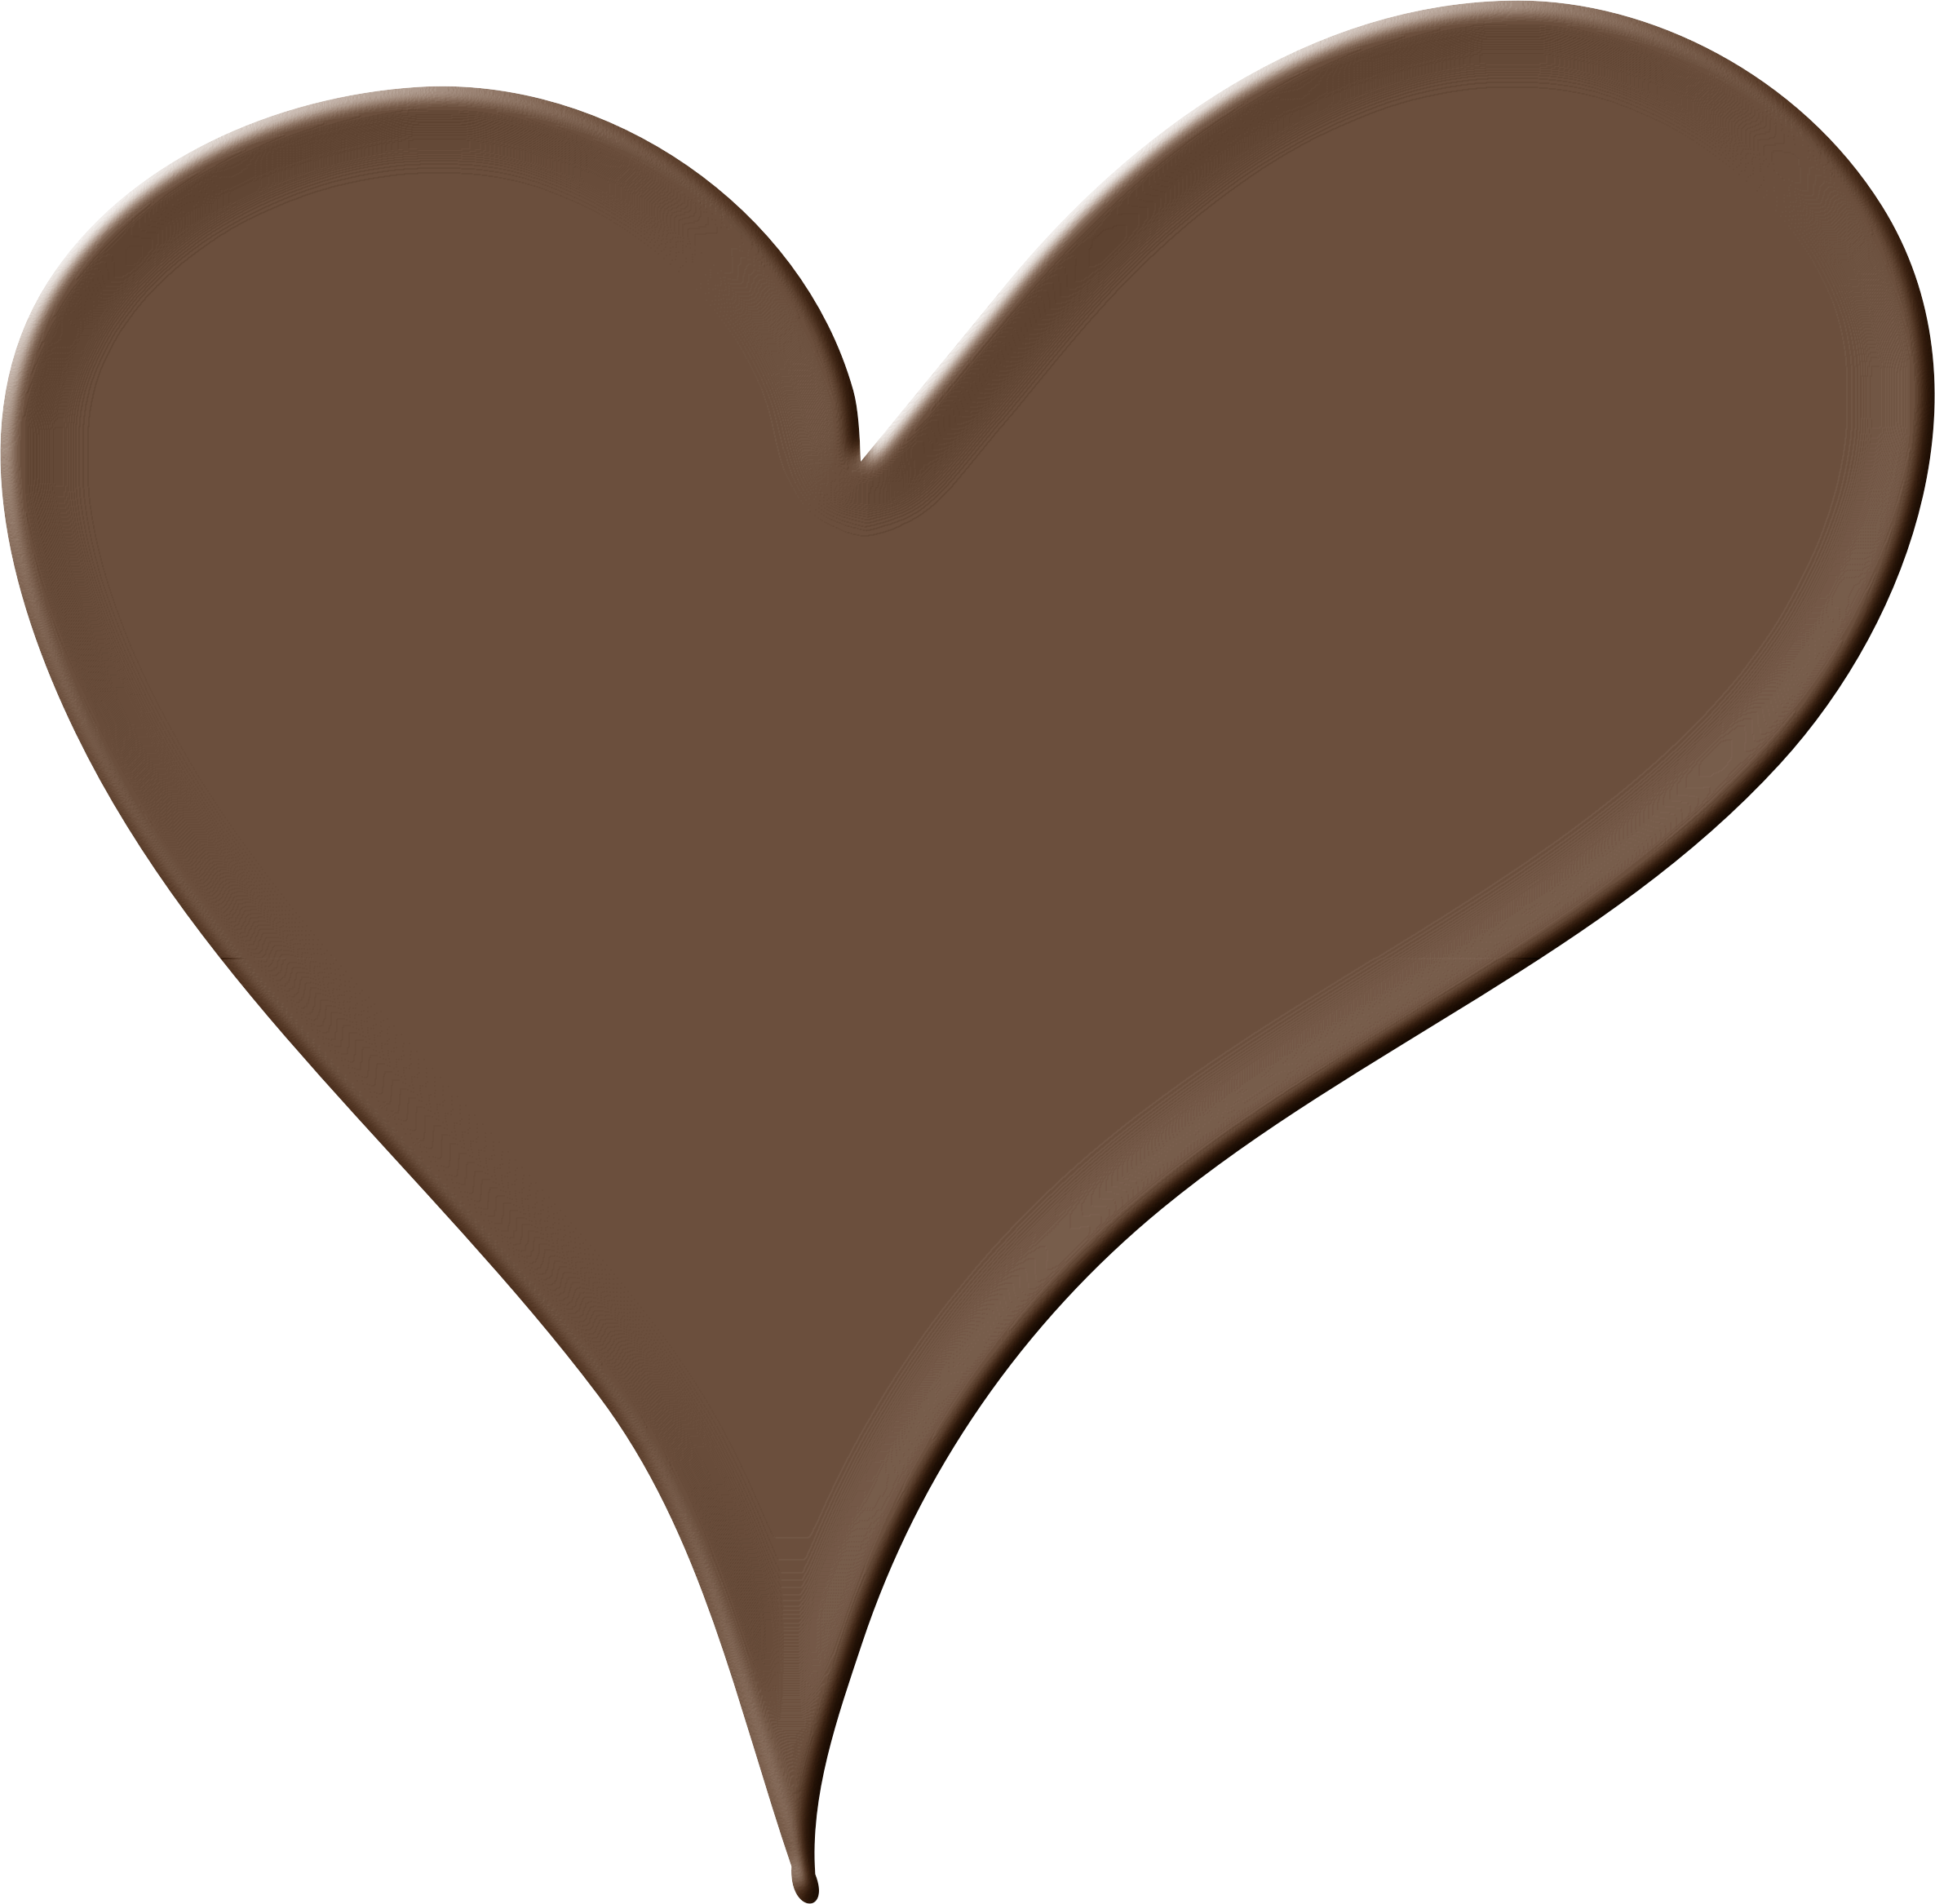 Medium Image - Chocolate Heart Png (2372x2334)